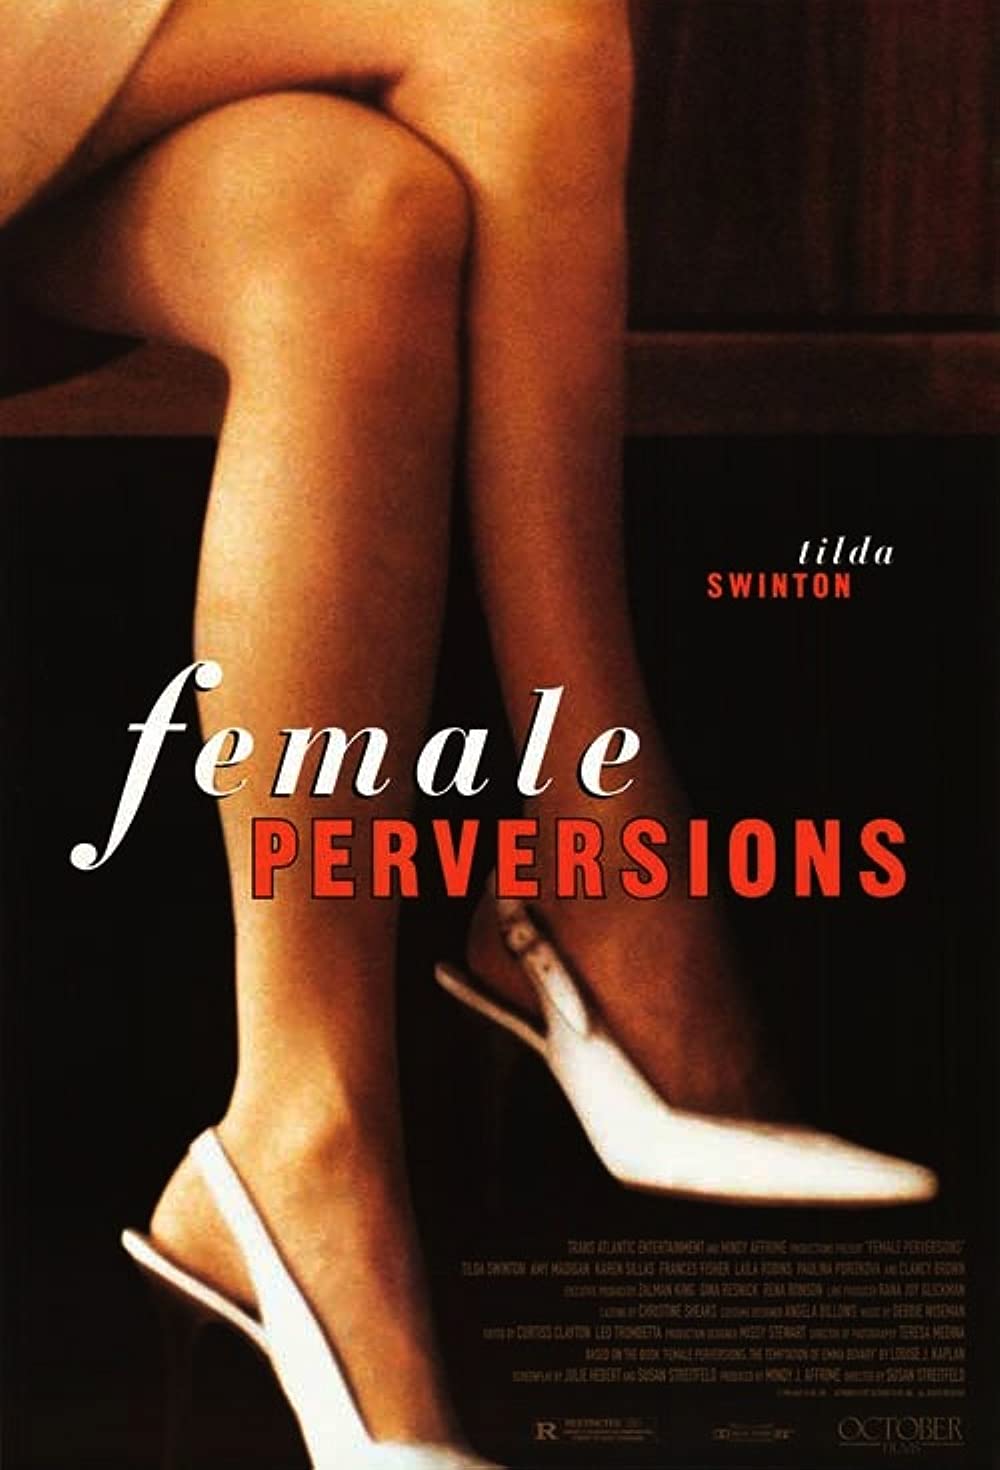 Filmbeschreibung zu Female Perversions (OV)